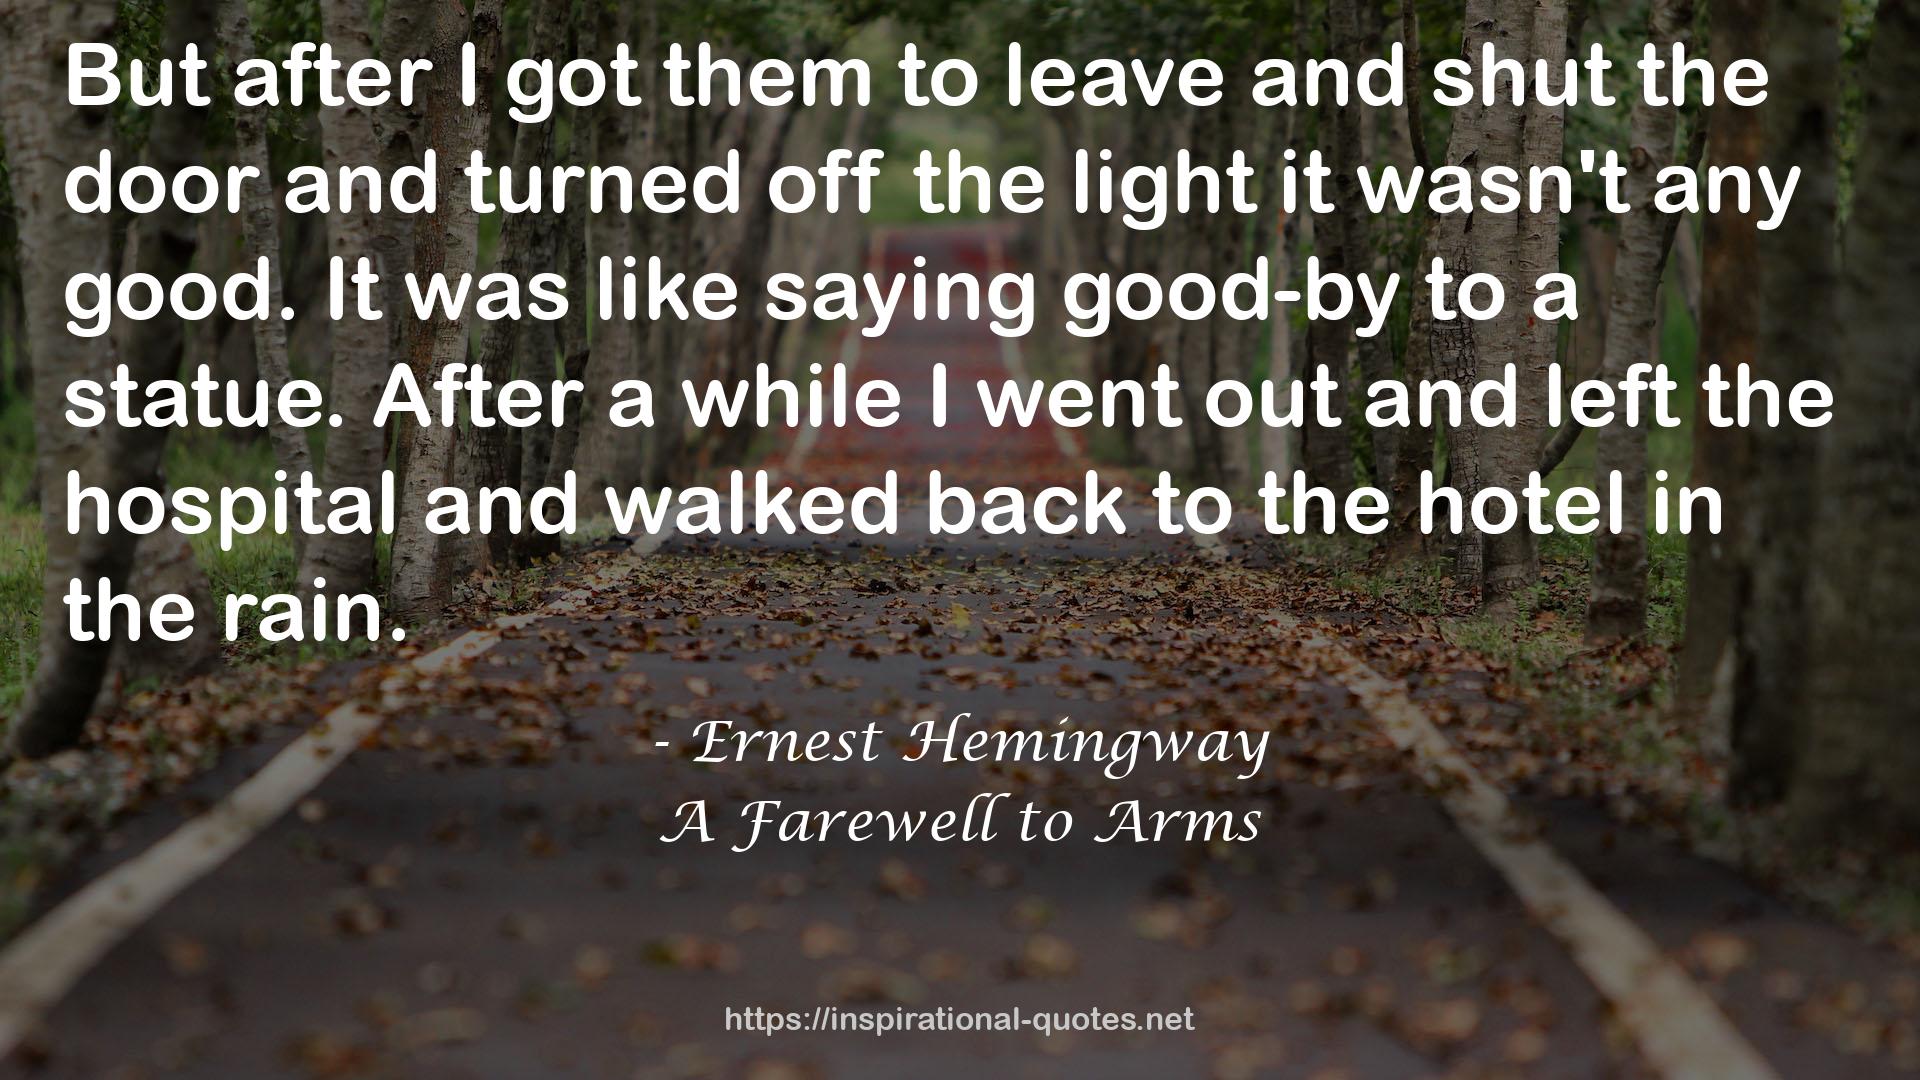 Ernest Hemingway QUOTES